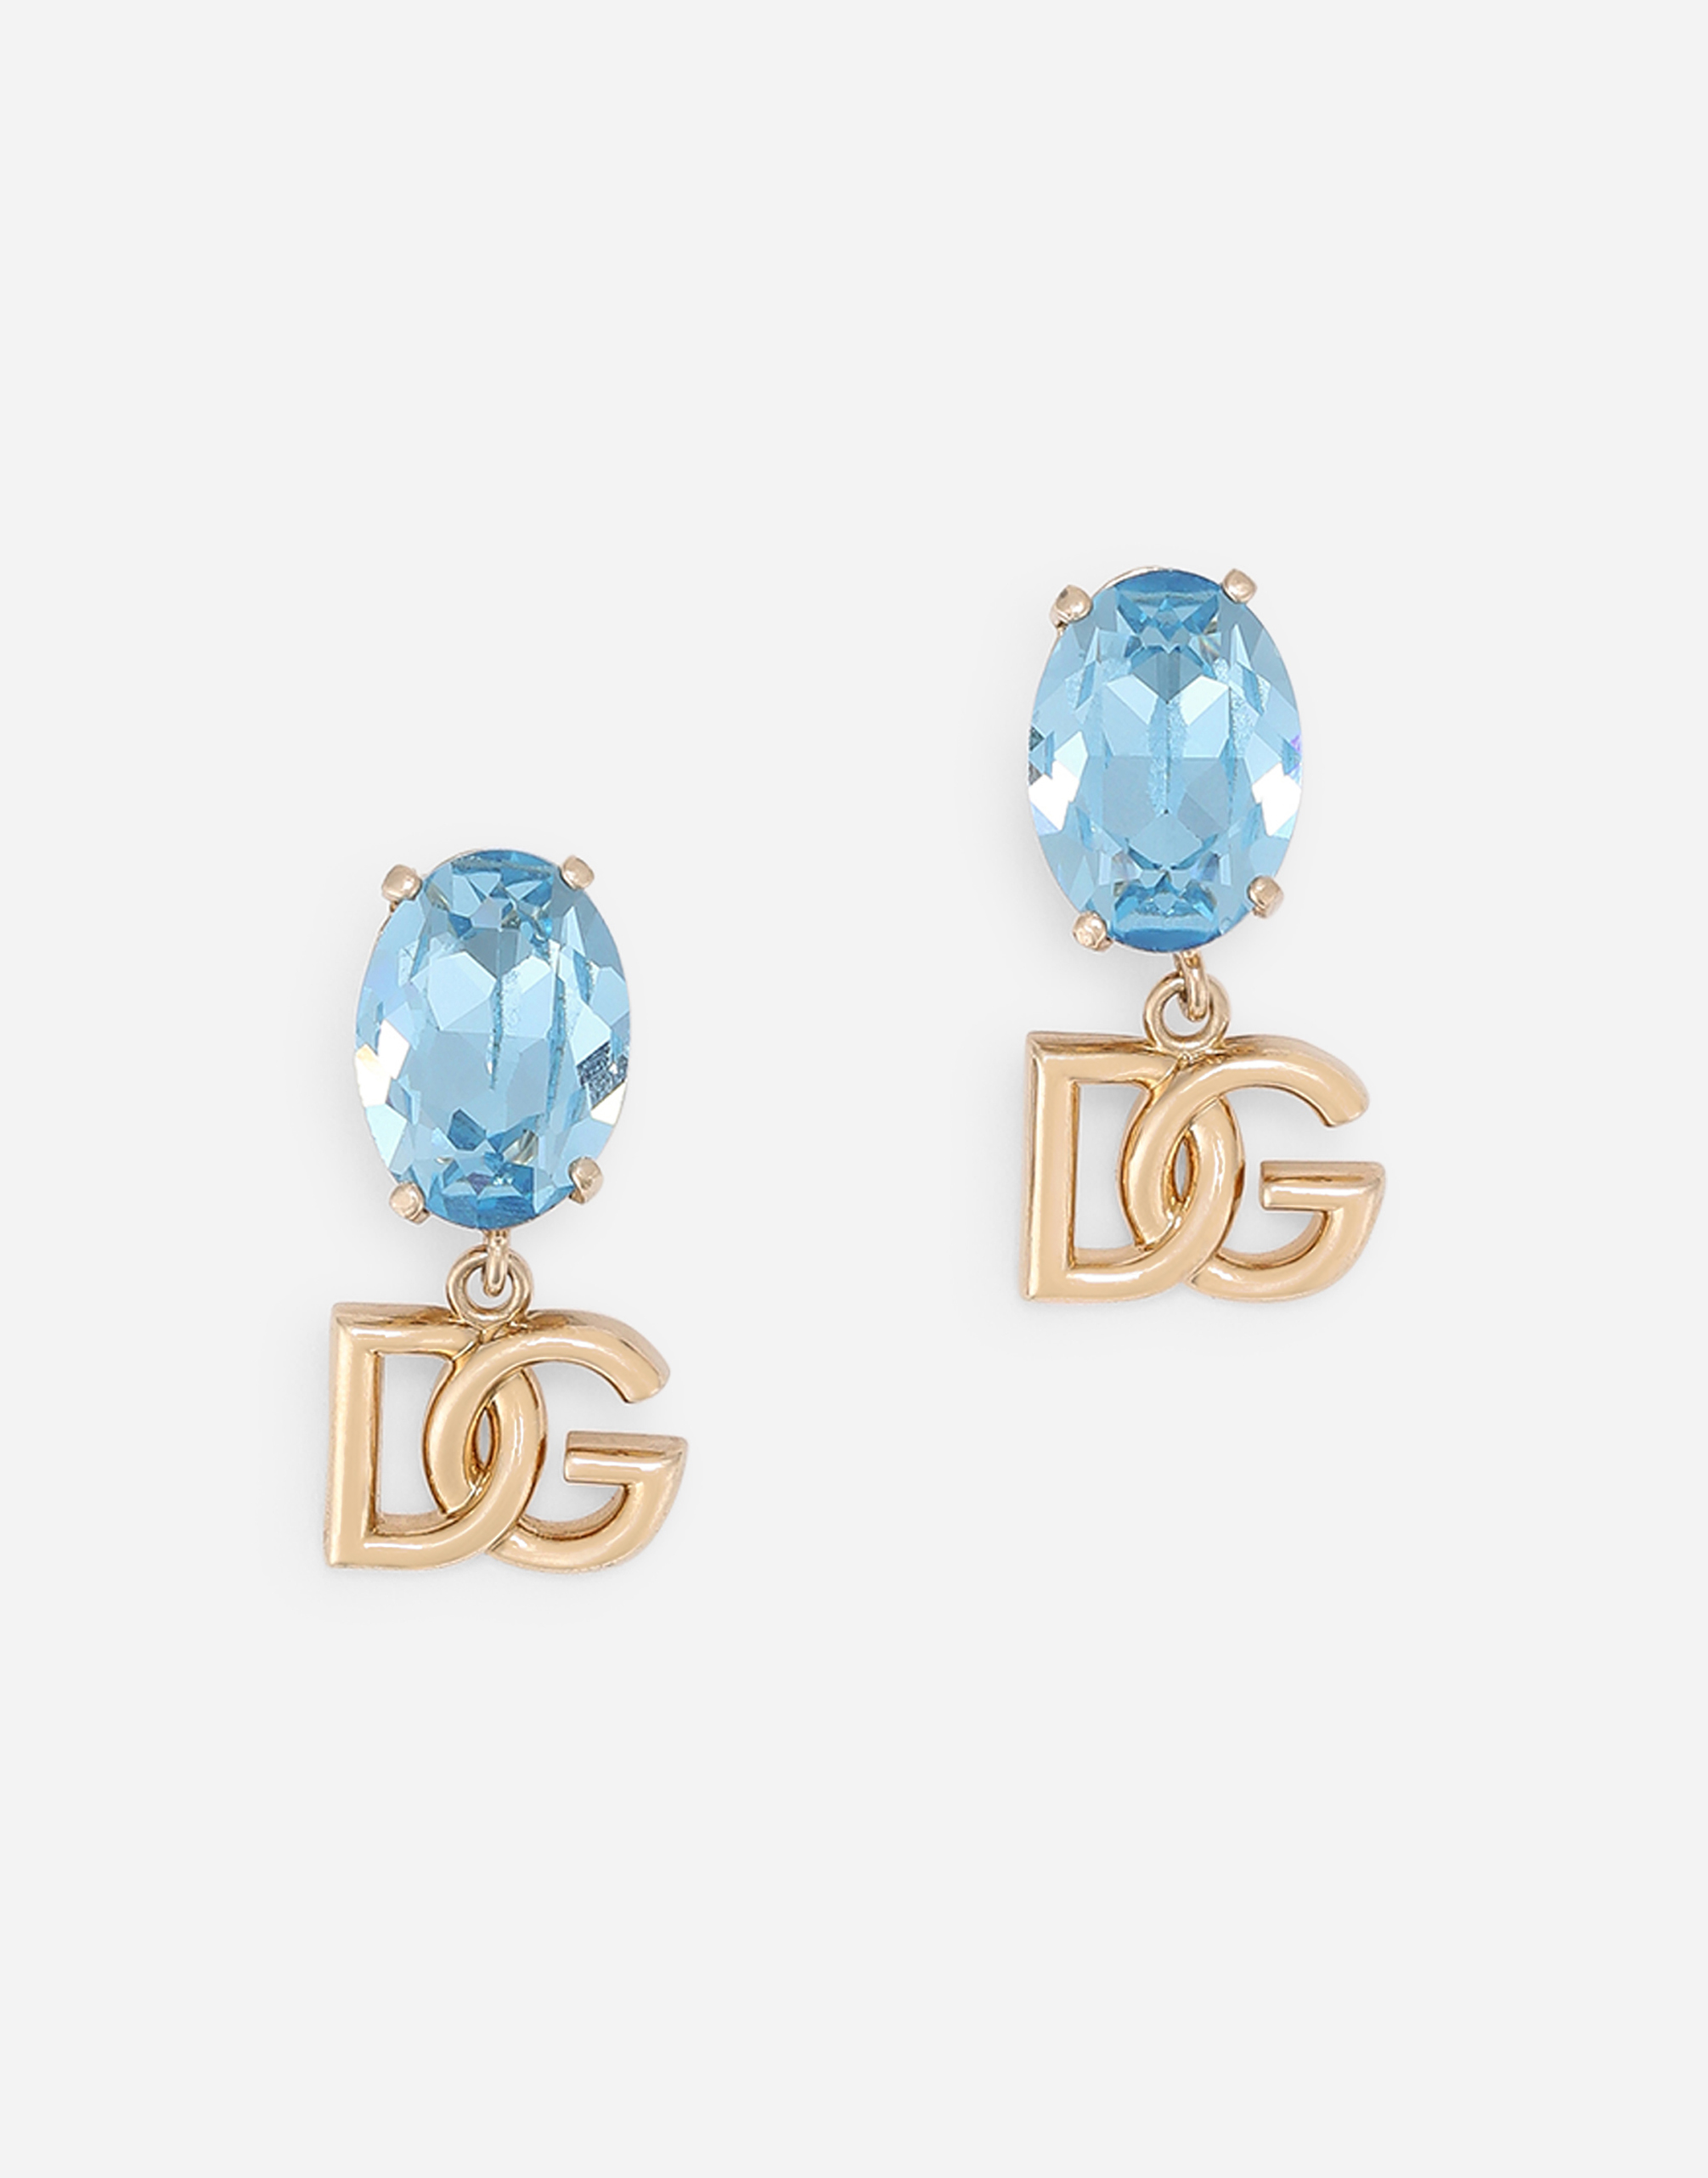 Drop earrings with rhinestones and DG logo in Azure